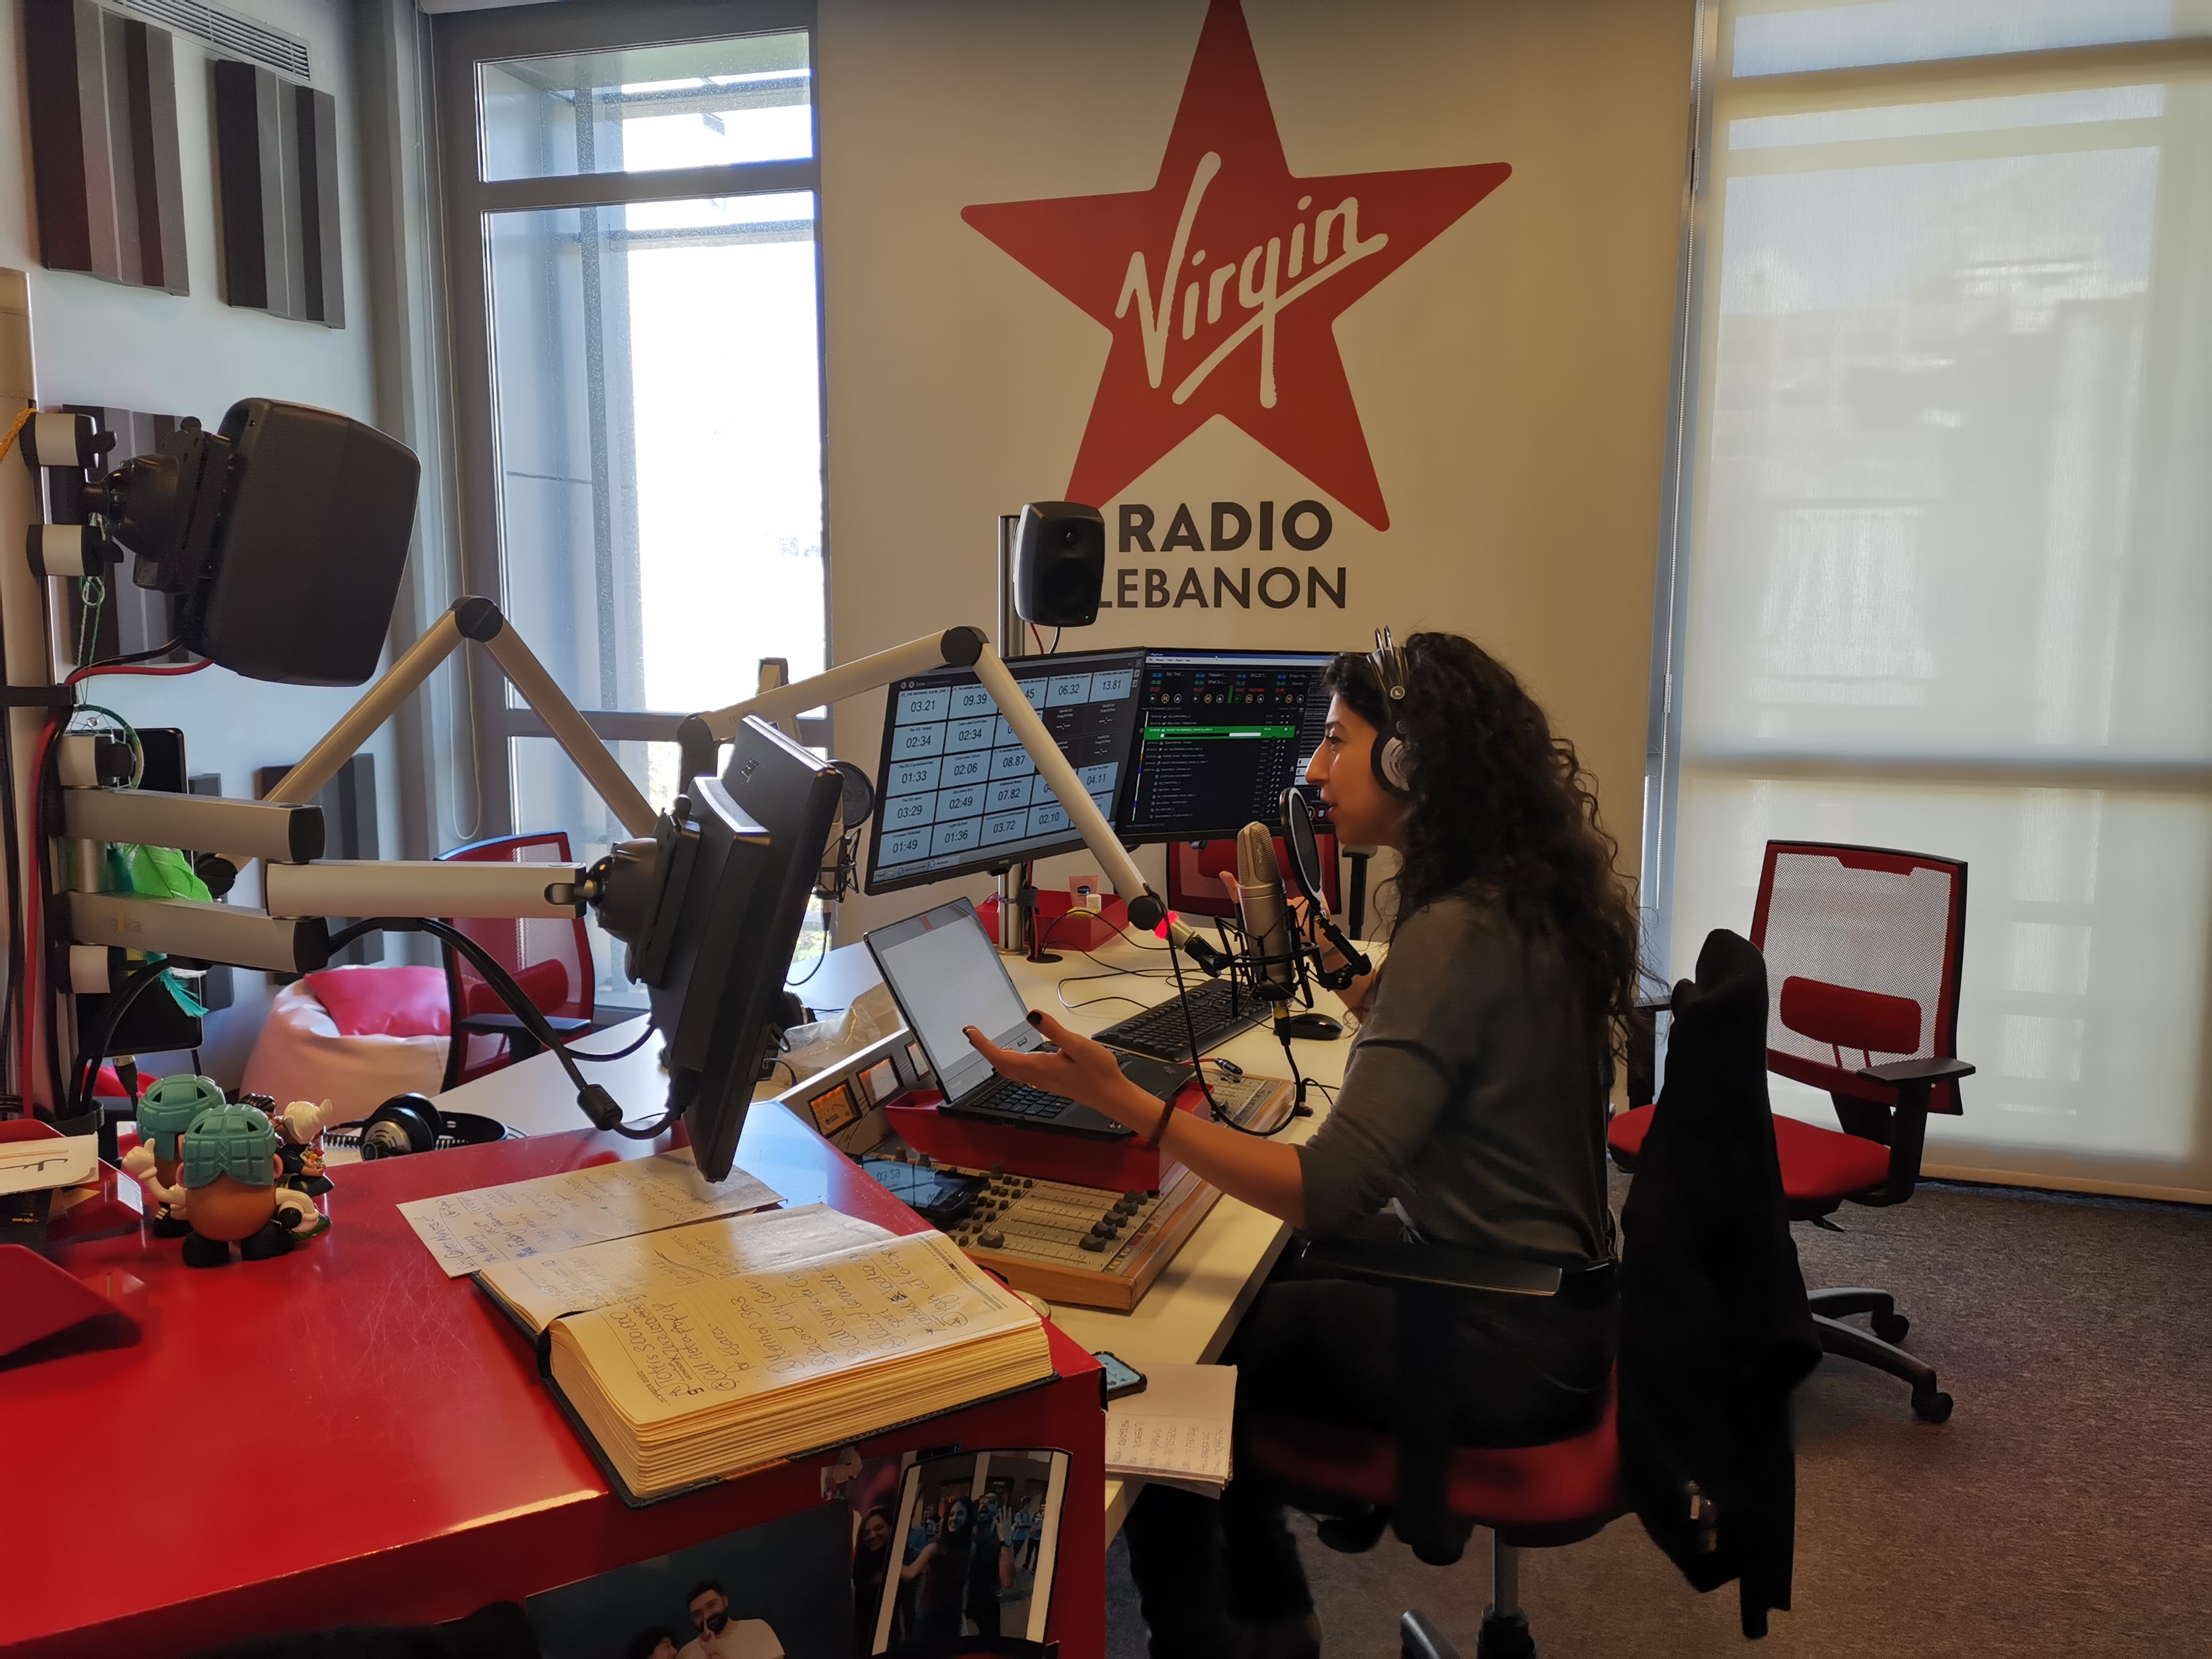 The Virgin Radio Lebanon studio